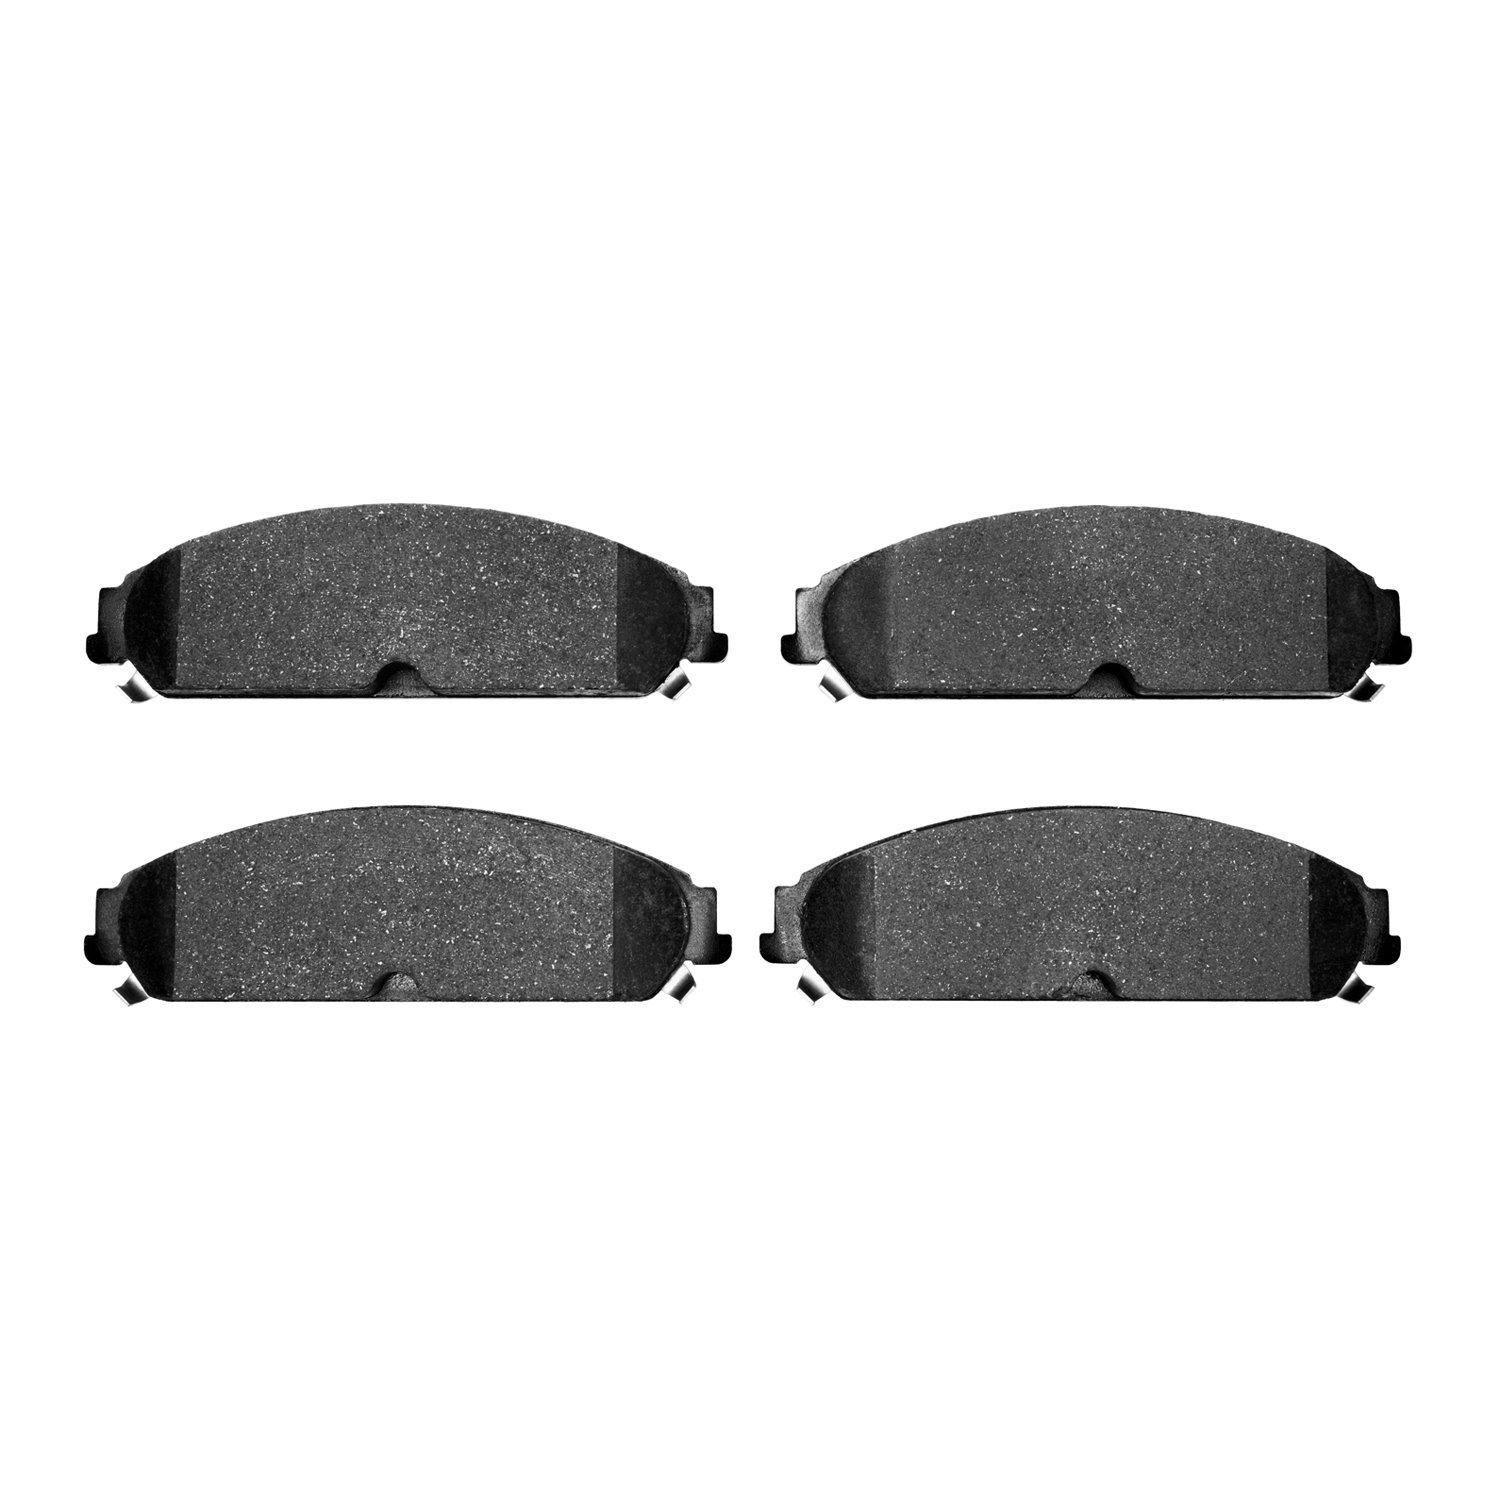 1310-1058-00 3000-Series Ceramic Brake Pads, Fits Select Mopar, Position: Front